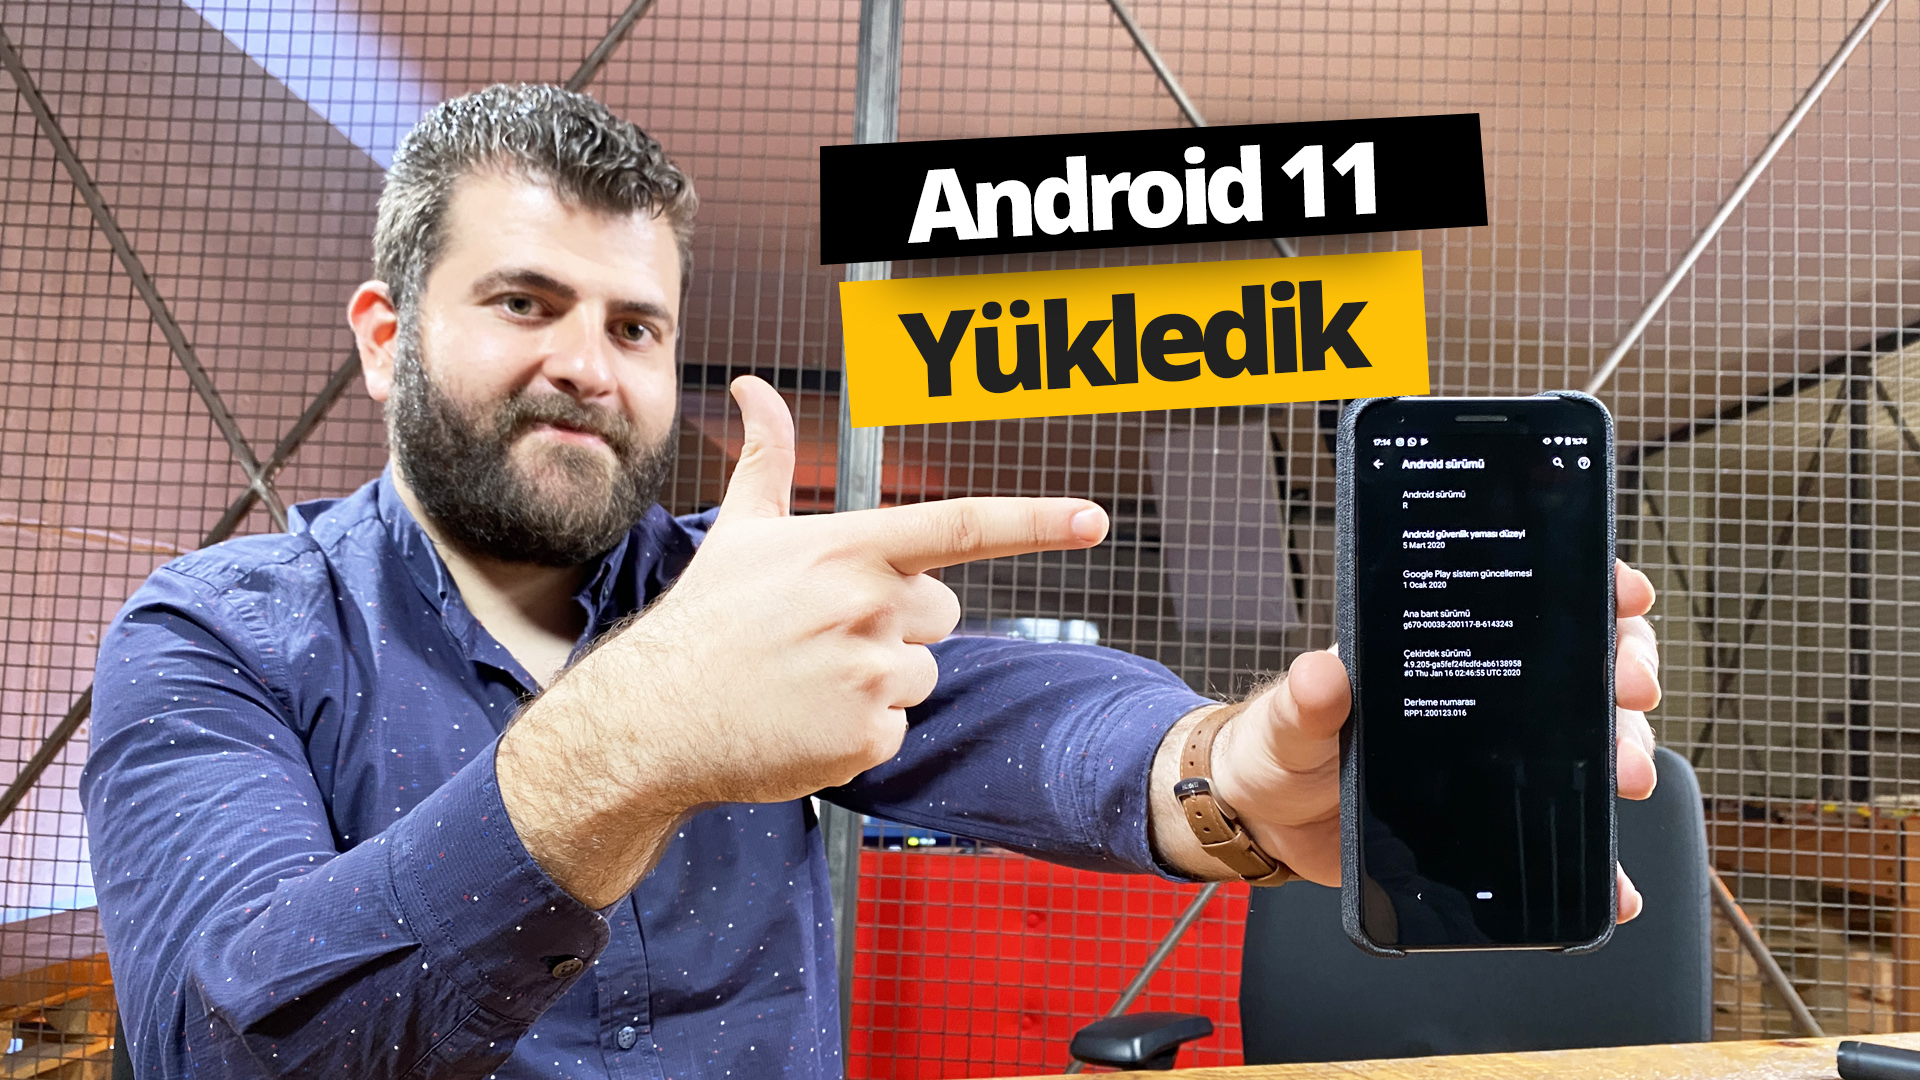 Android 11 yükledik! İşte Android 11 özellikleri!